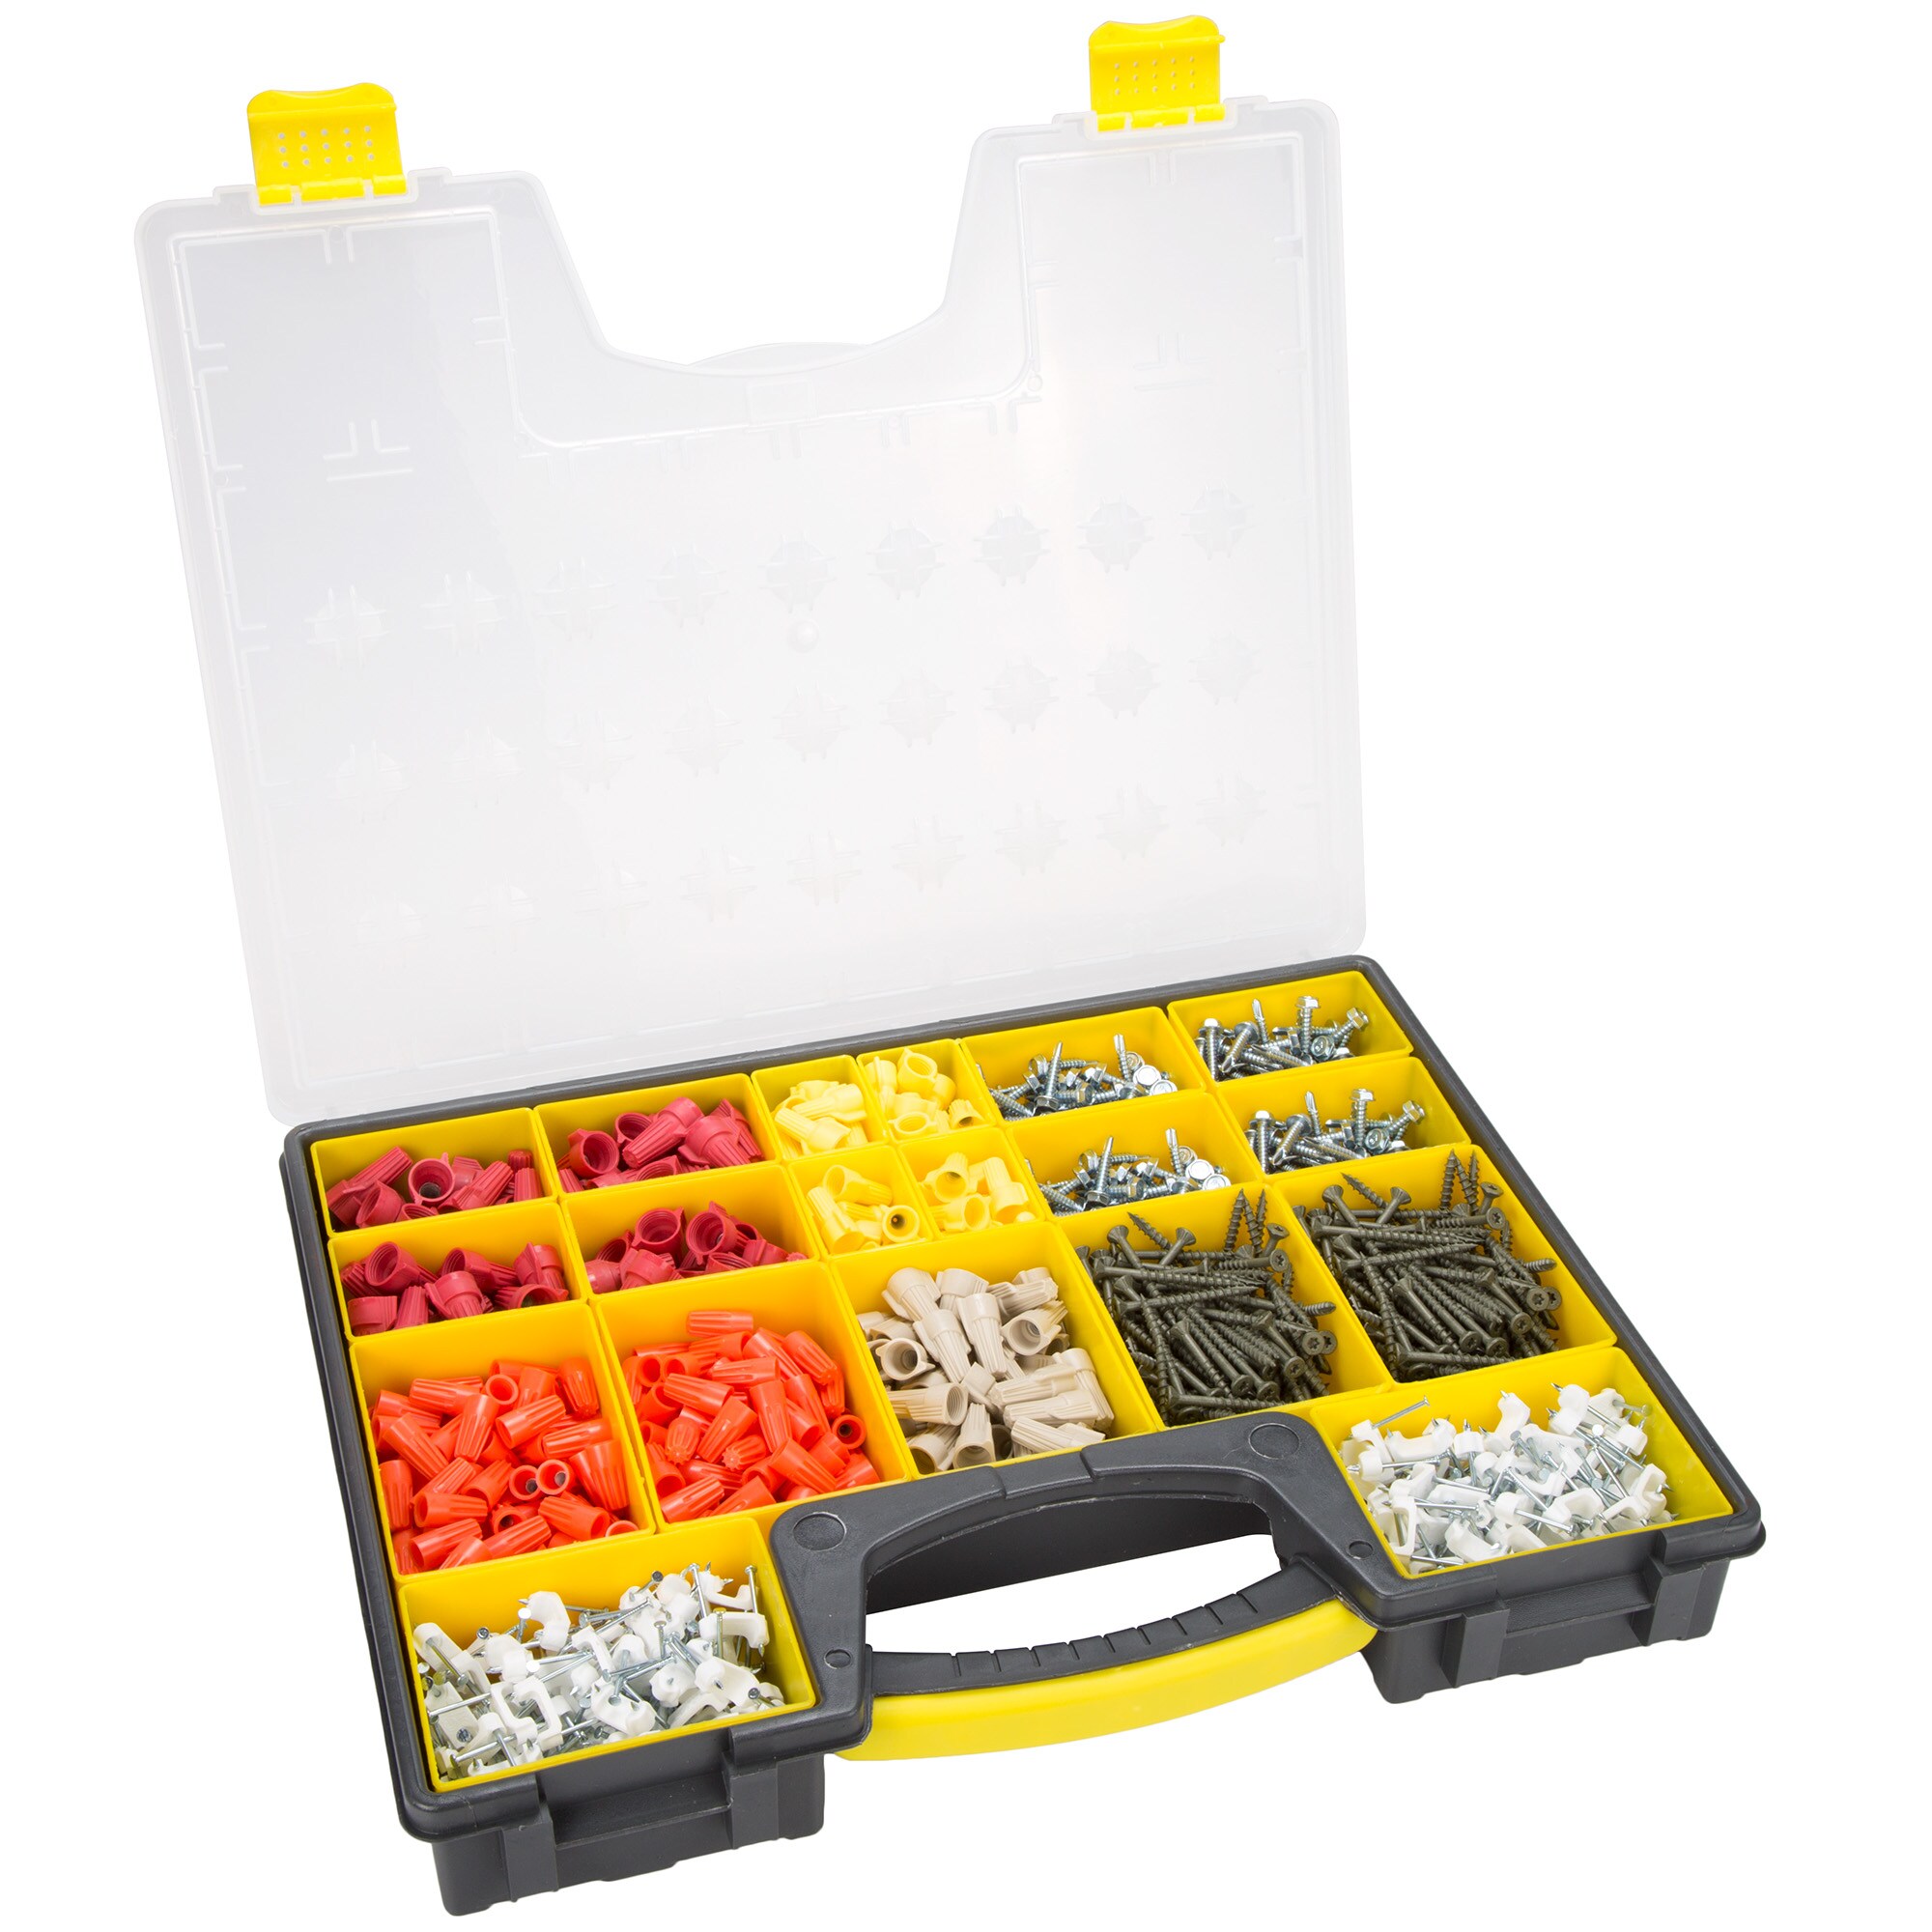 Wholesale Good Quality Cajas Organizadoras De Plastico Small Parts